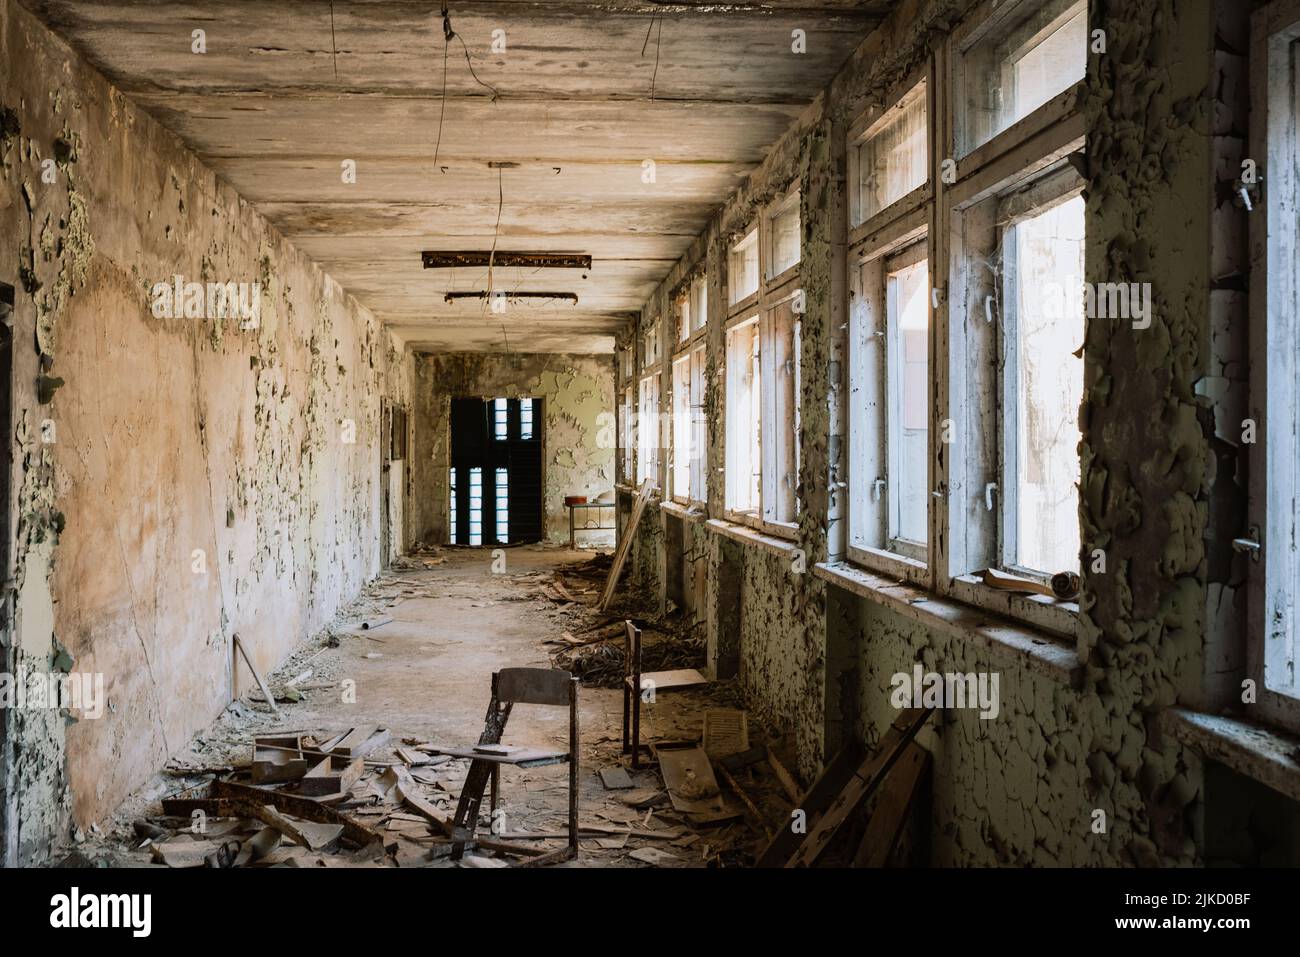 Photos from around the chernobyl exclusion zone, ukraine. Stock Photo